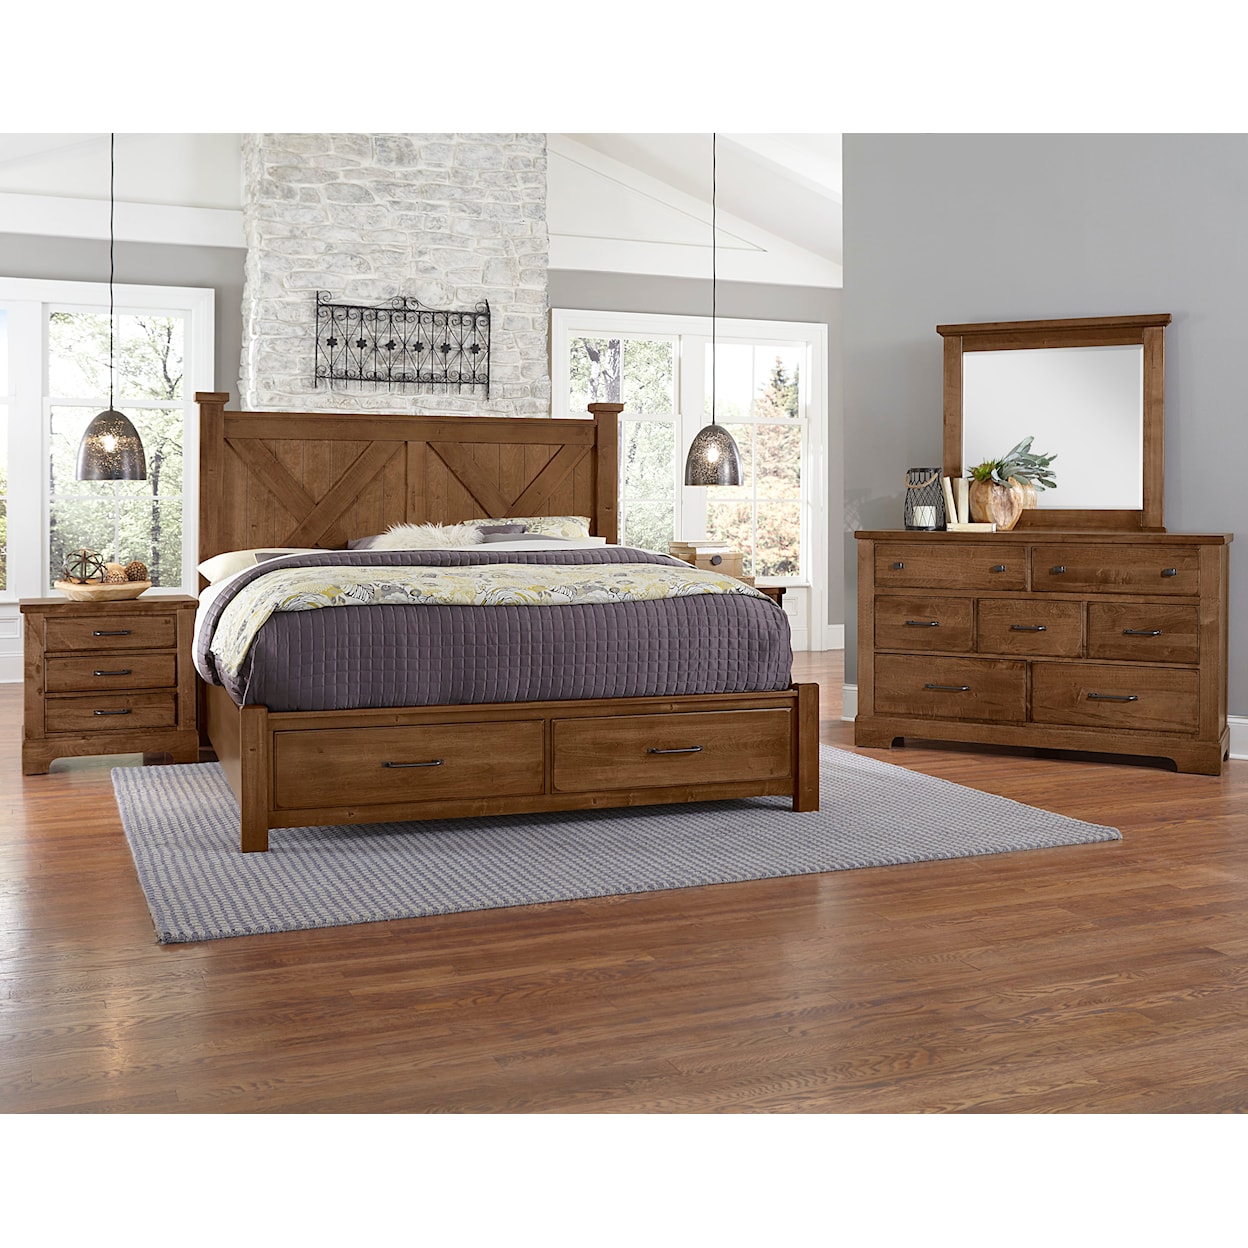 Artisan & Post Cool Rustic Queen Storage Bed